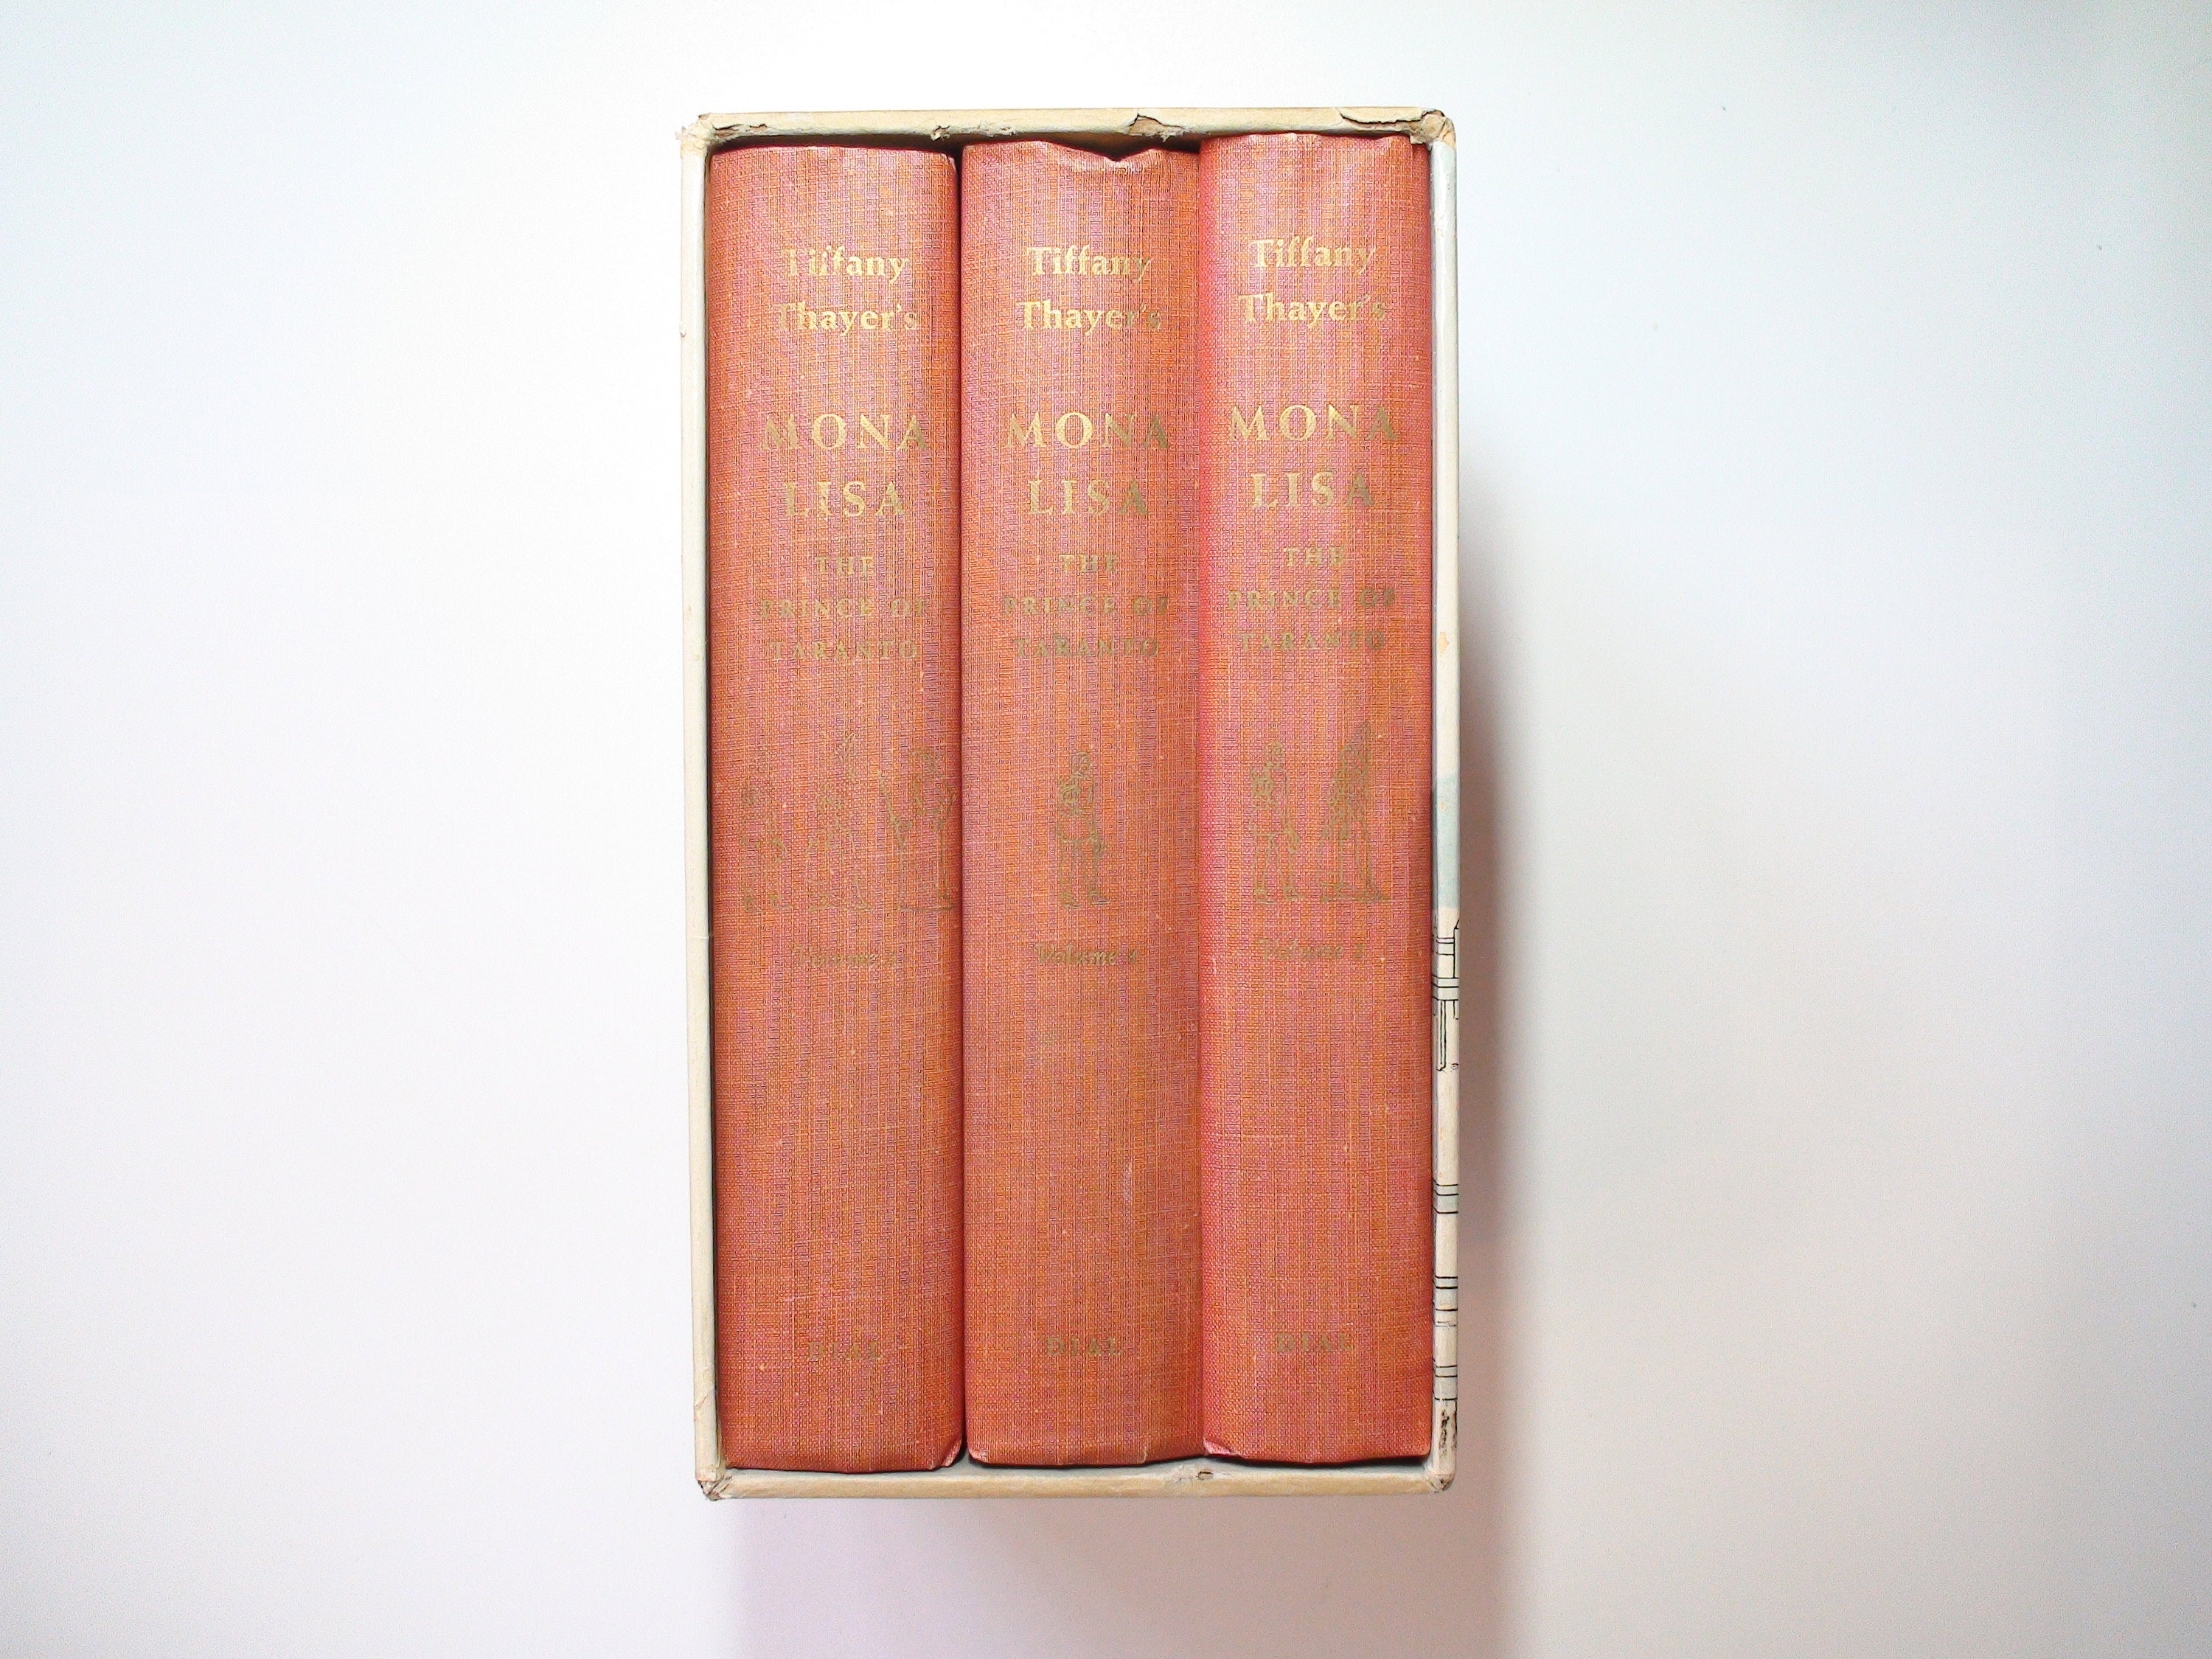 Mona Lisa, Tiffany Thayer, Complete in 3 Volumes, In Slipcase, 1st Ed, 1956